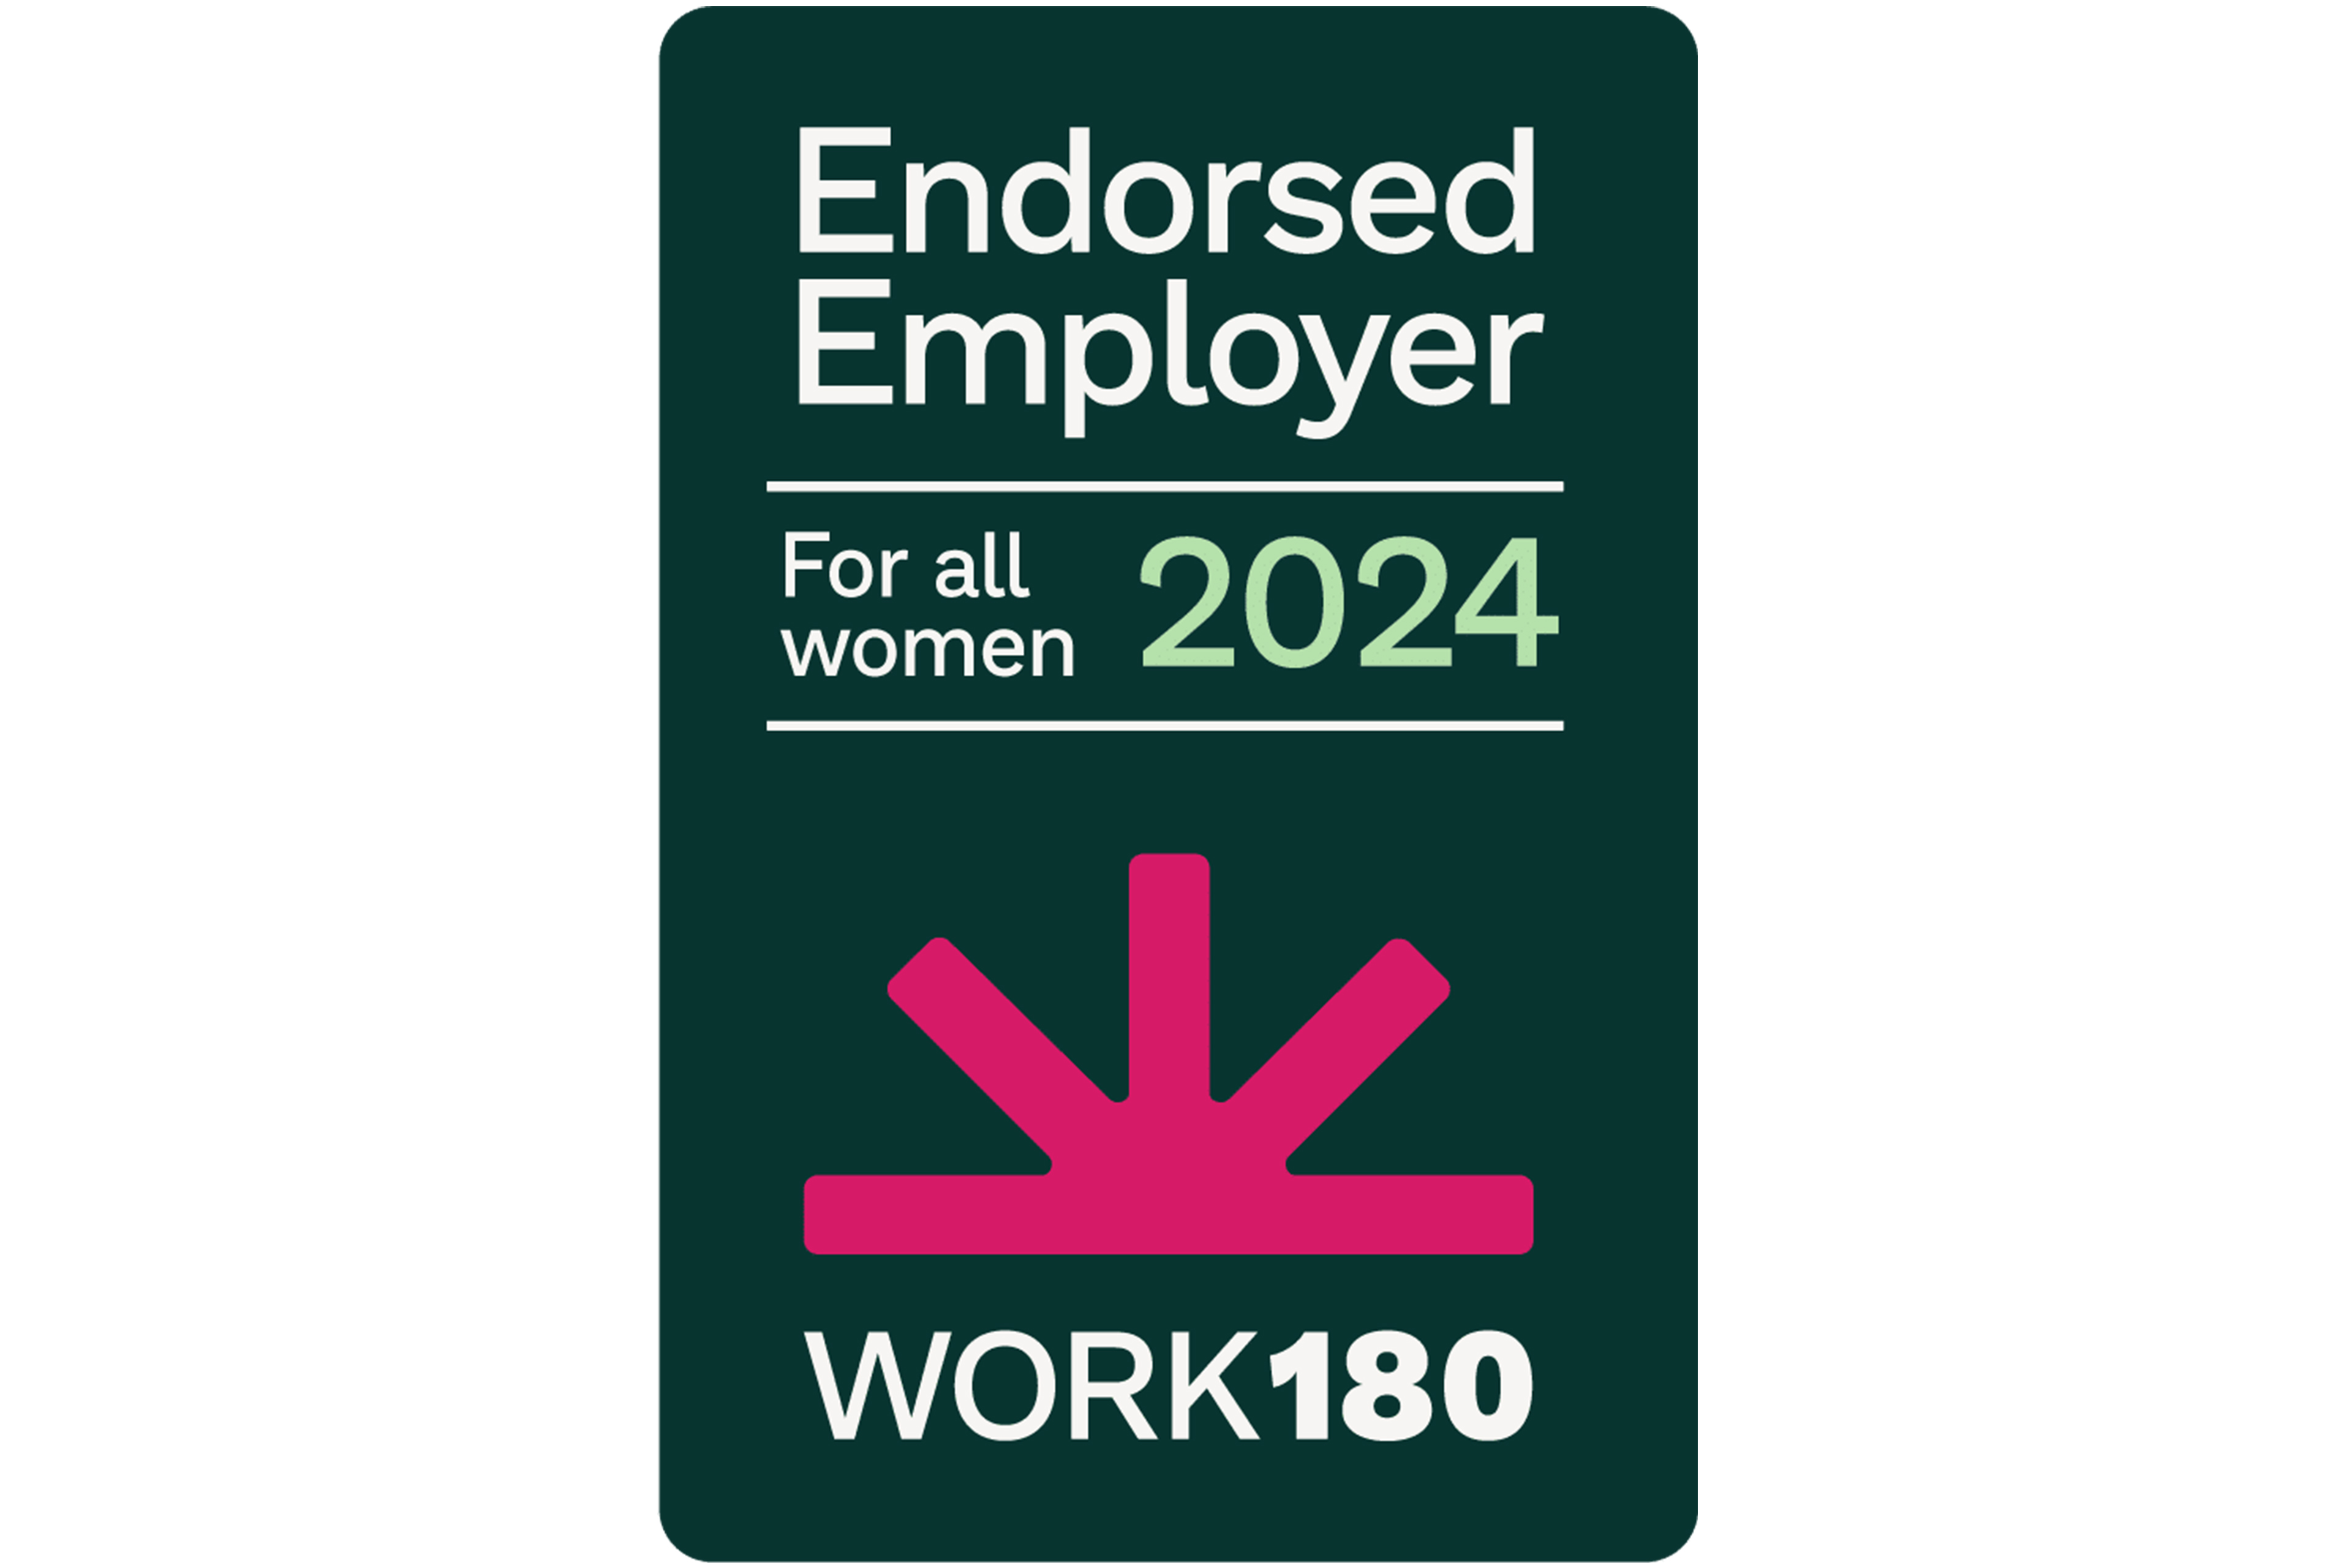 Endorsed employer for all women 2024